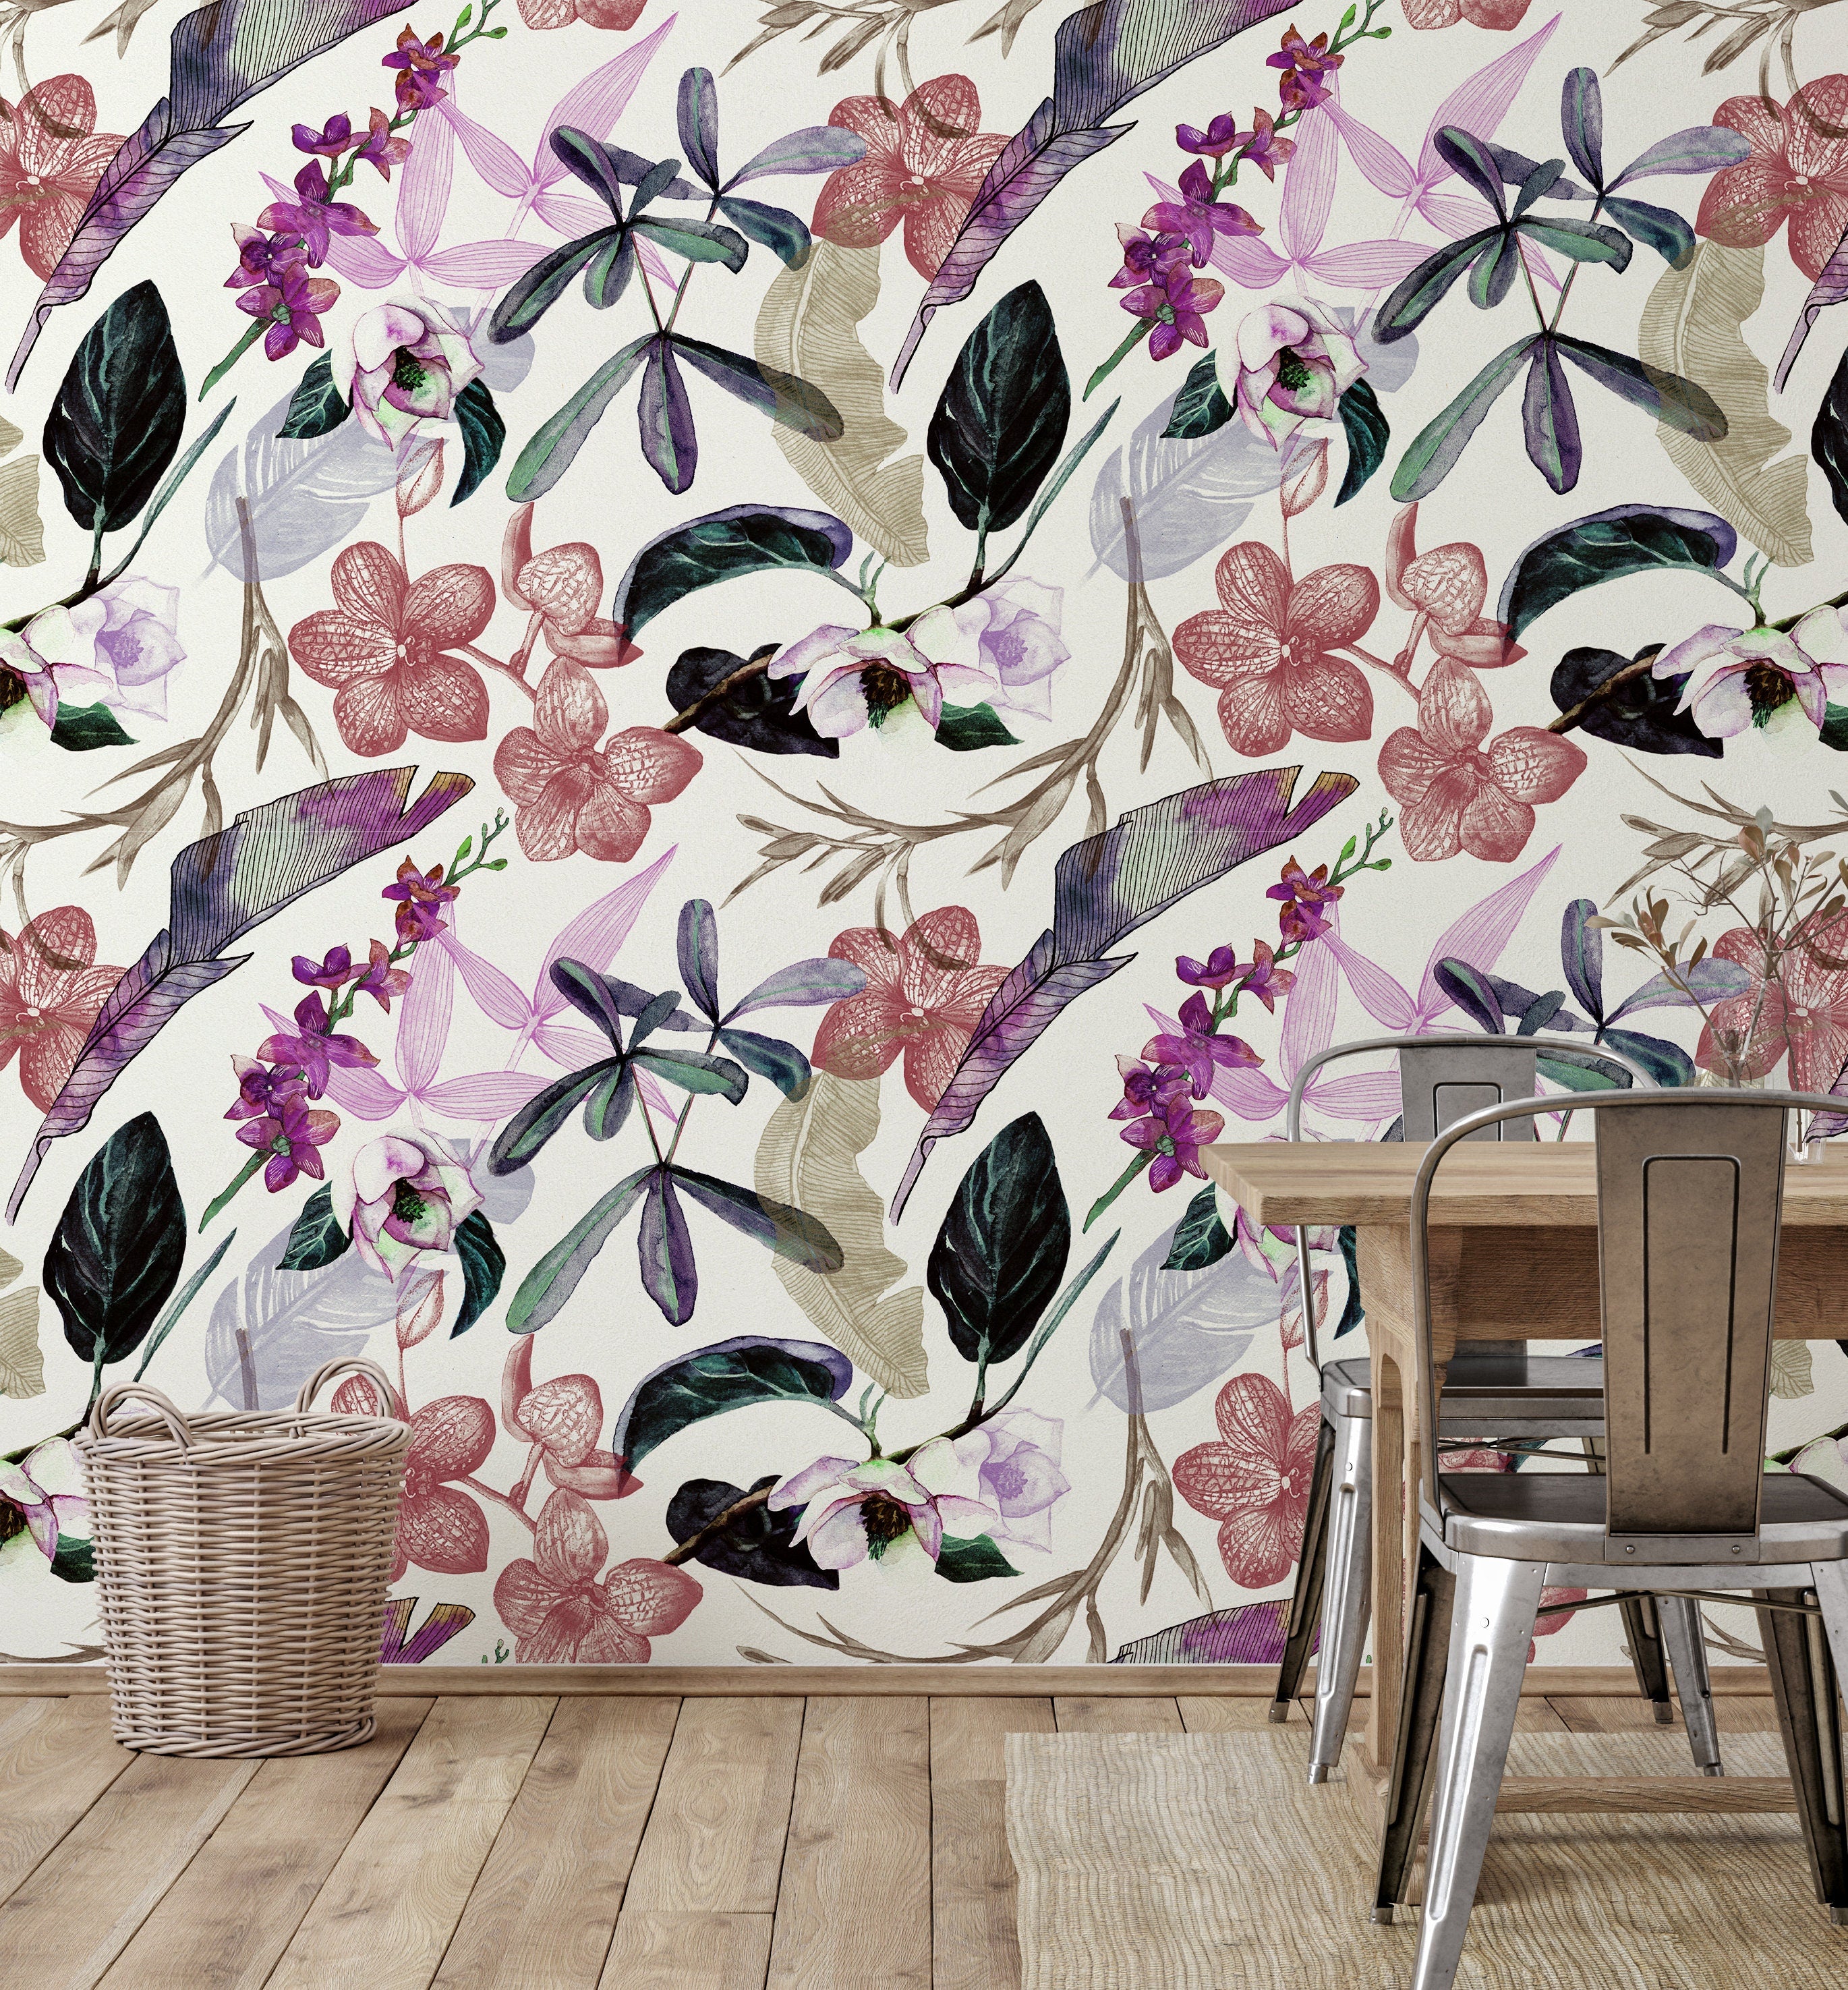 Purple Tropical Floral Wallpaper | Removable Wallpaper | Peel And Stick Wallpaper | Adhesive Wallpaper | Wall Paper Peel Stick Mural 2351 - JamesAndColors